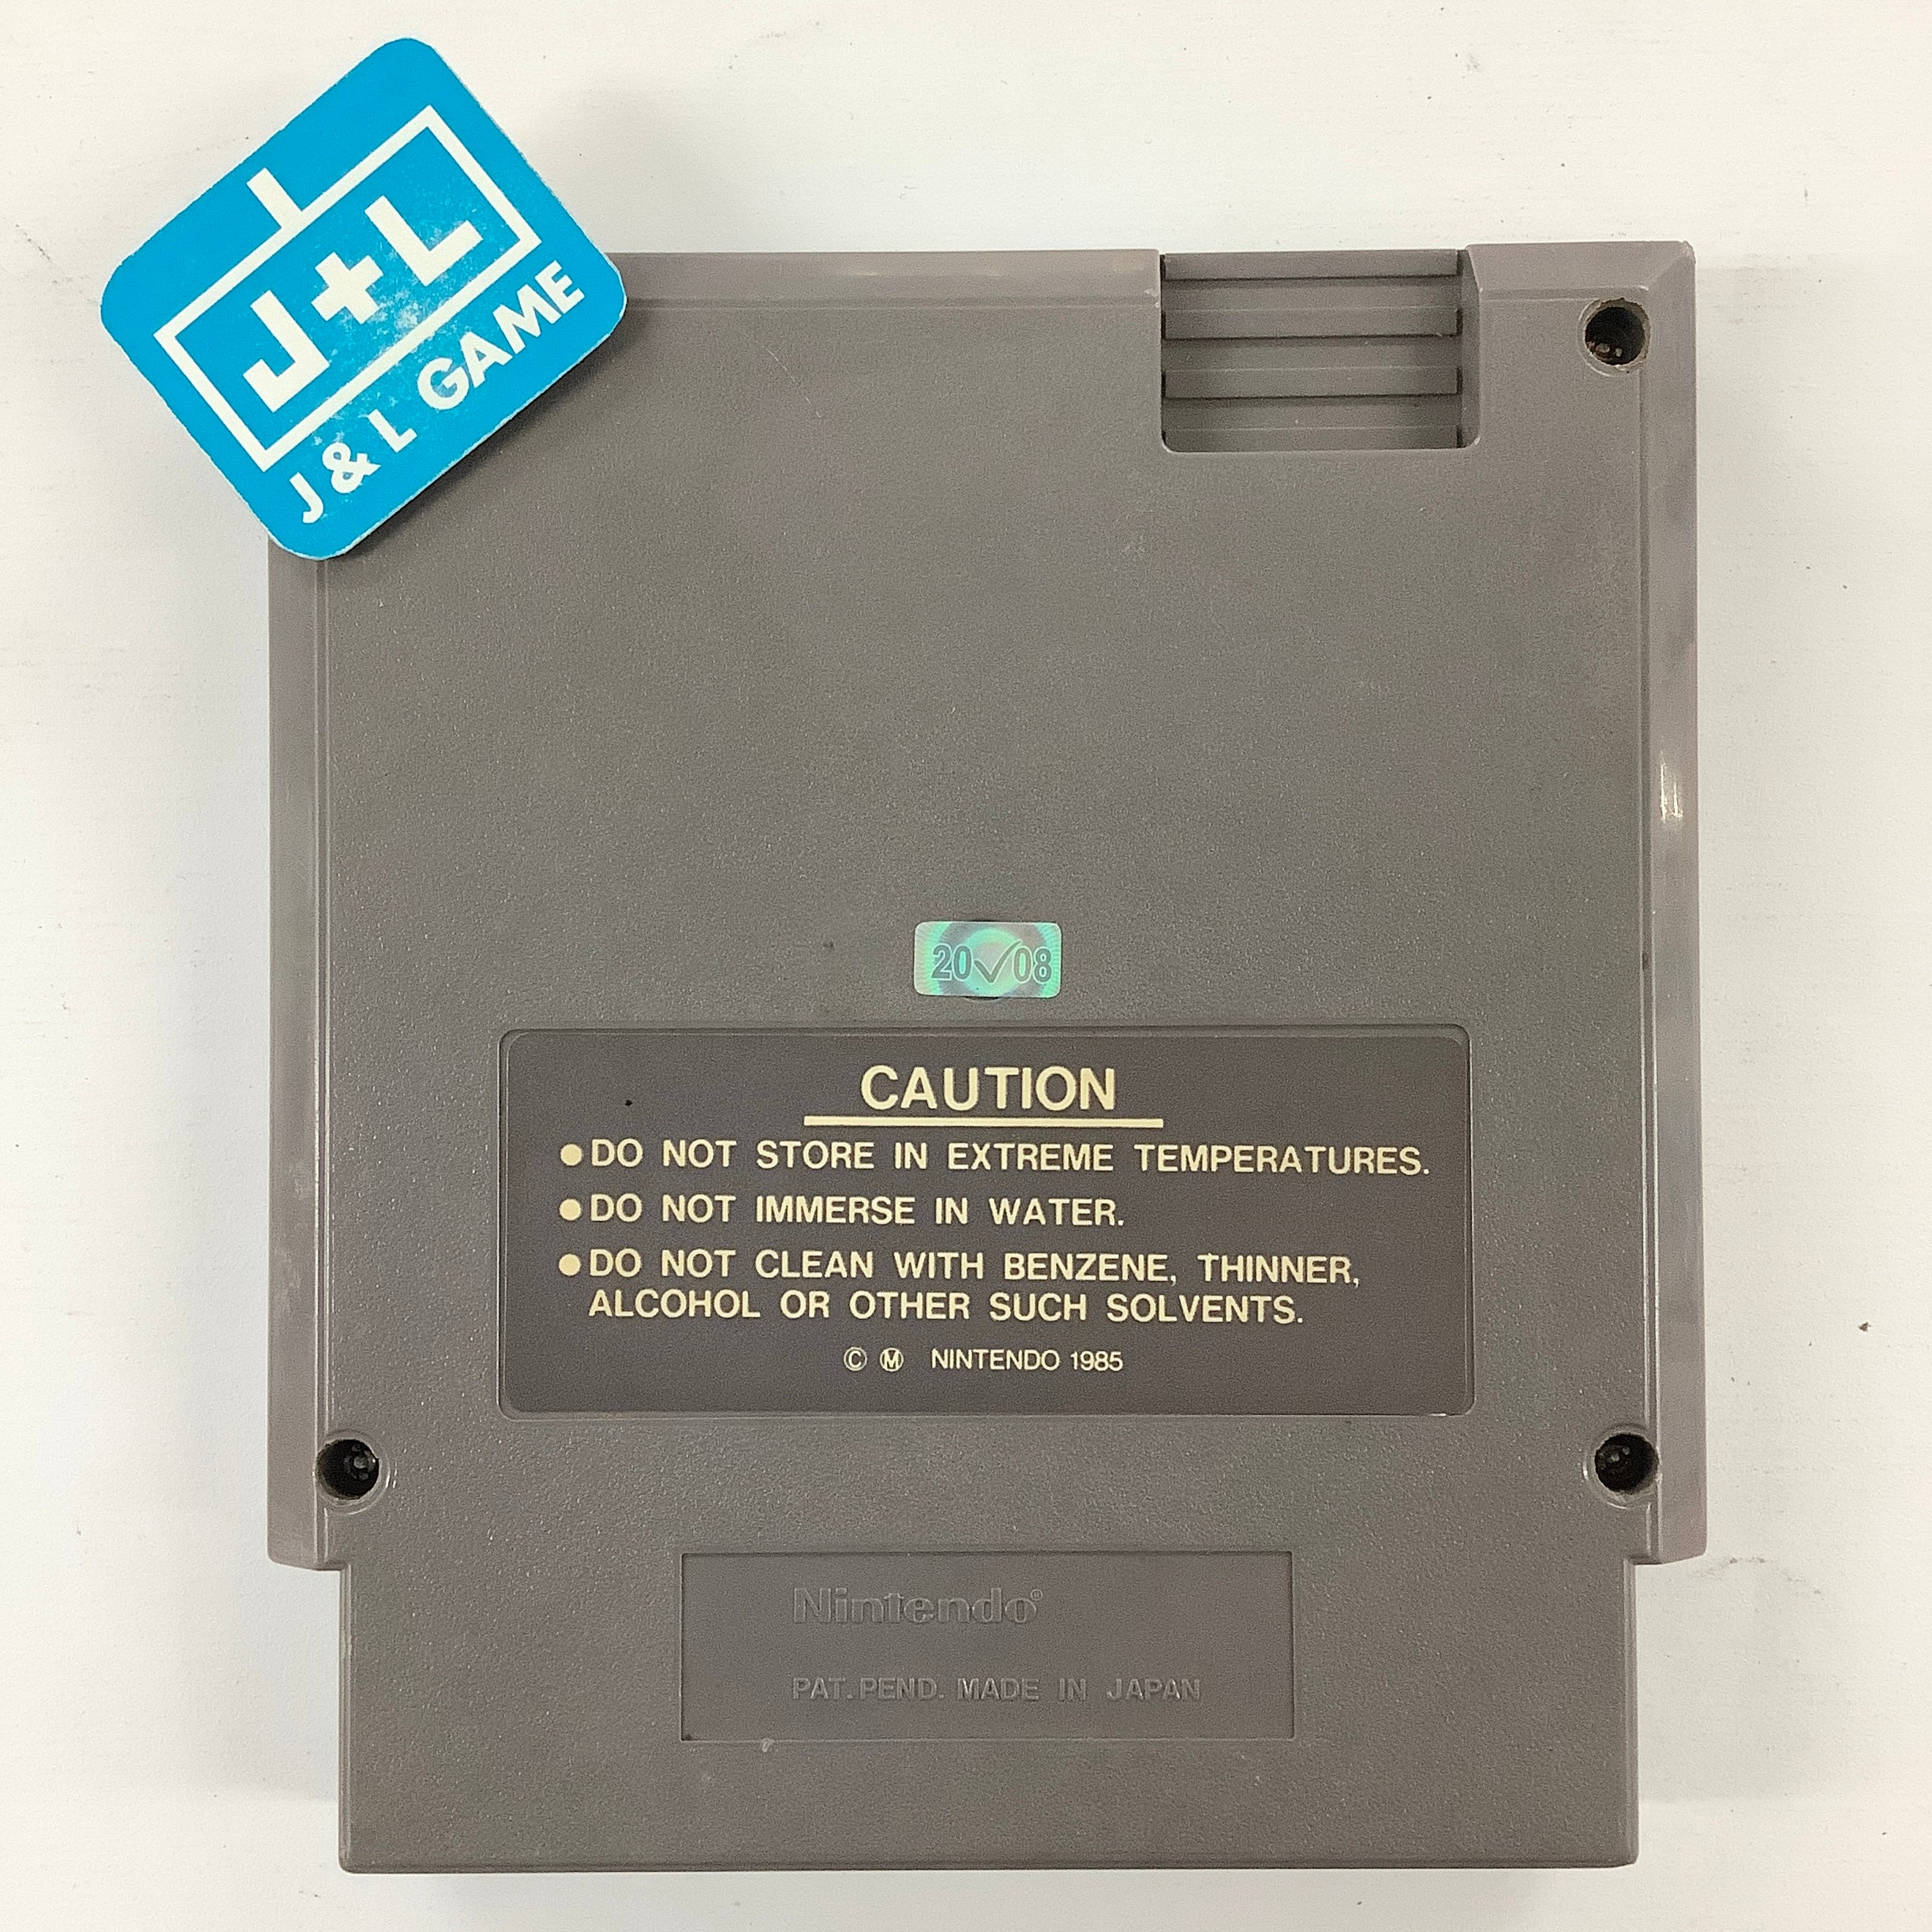 Spy Hunter - (NES) Nintendo Entertainment System [Pre-Owned] Video Games SunSoft   